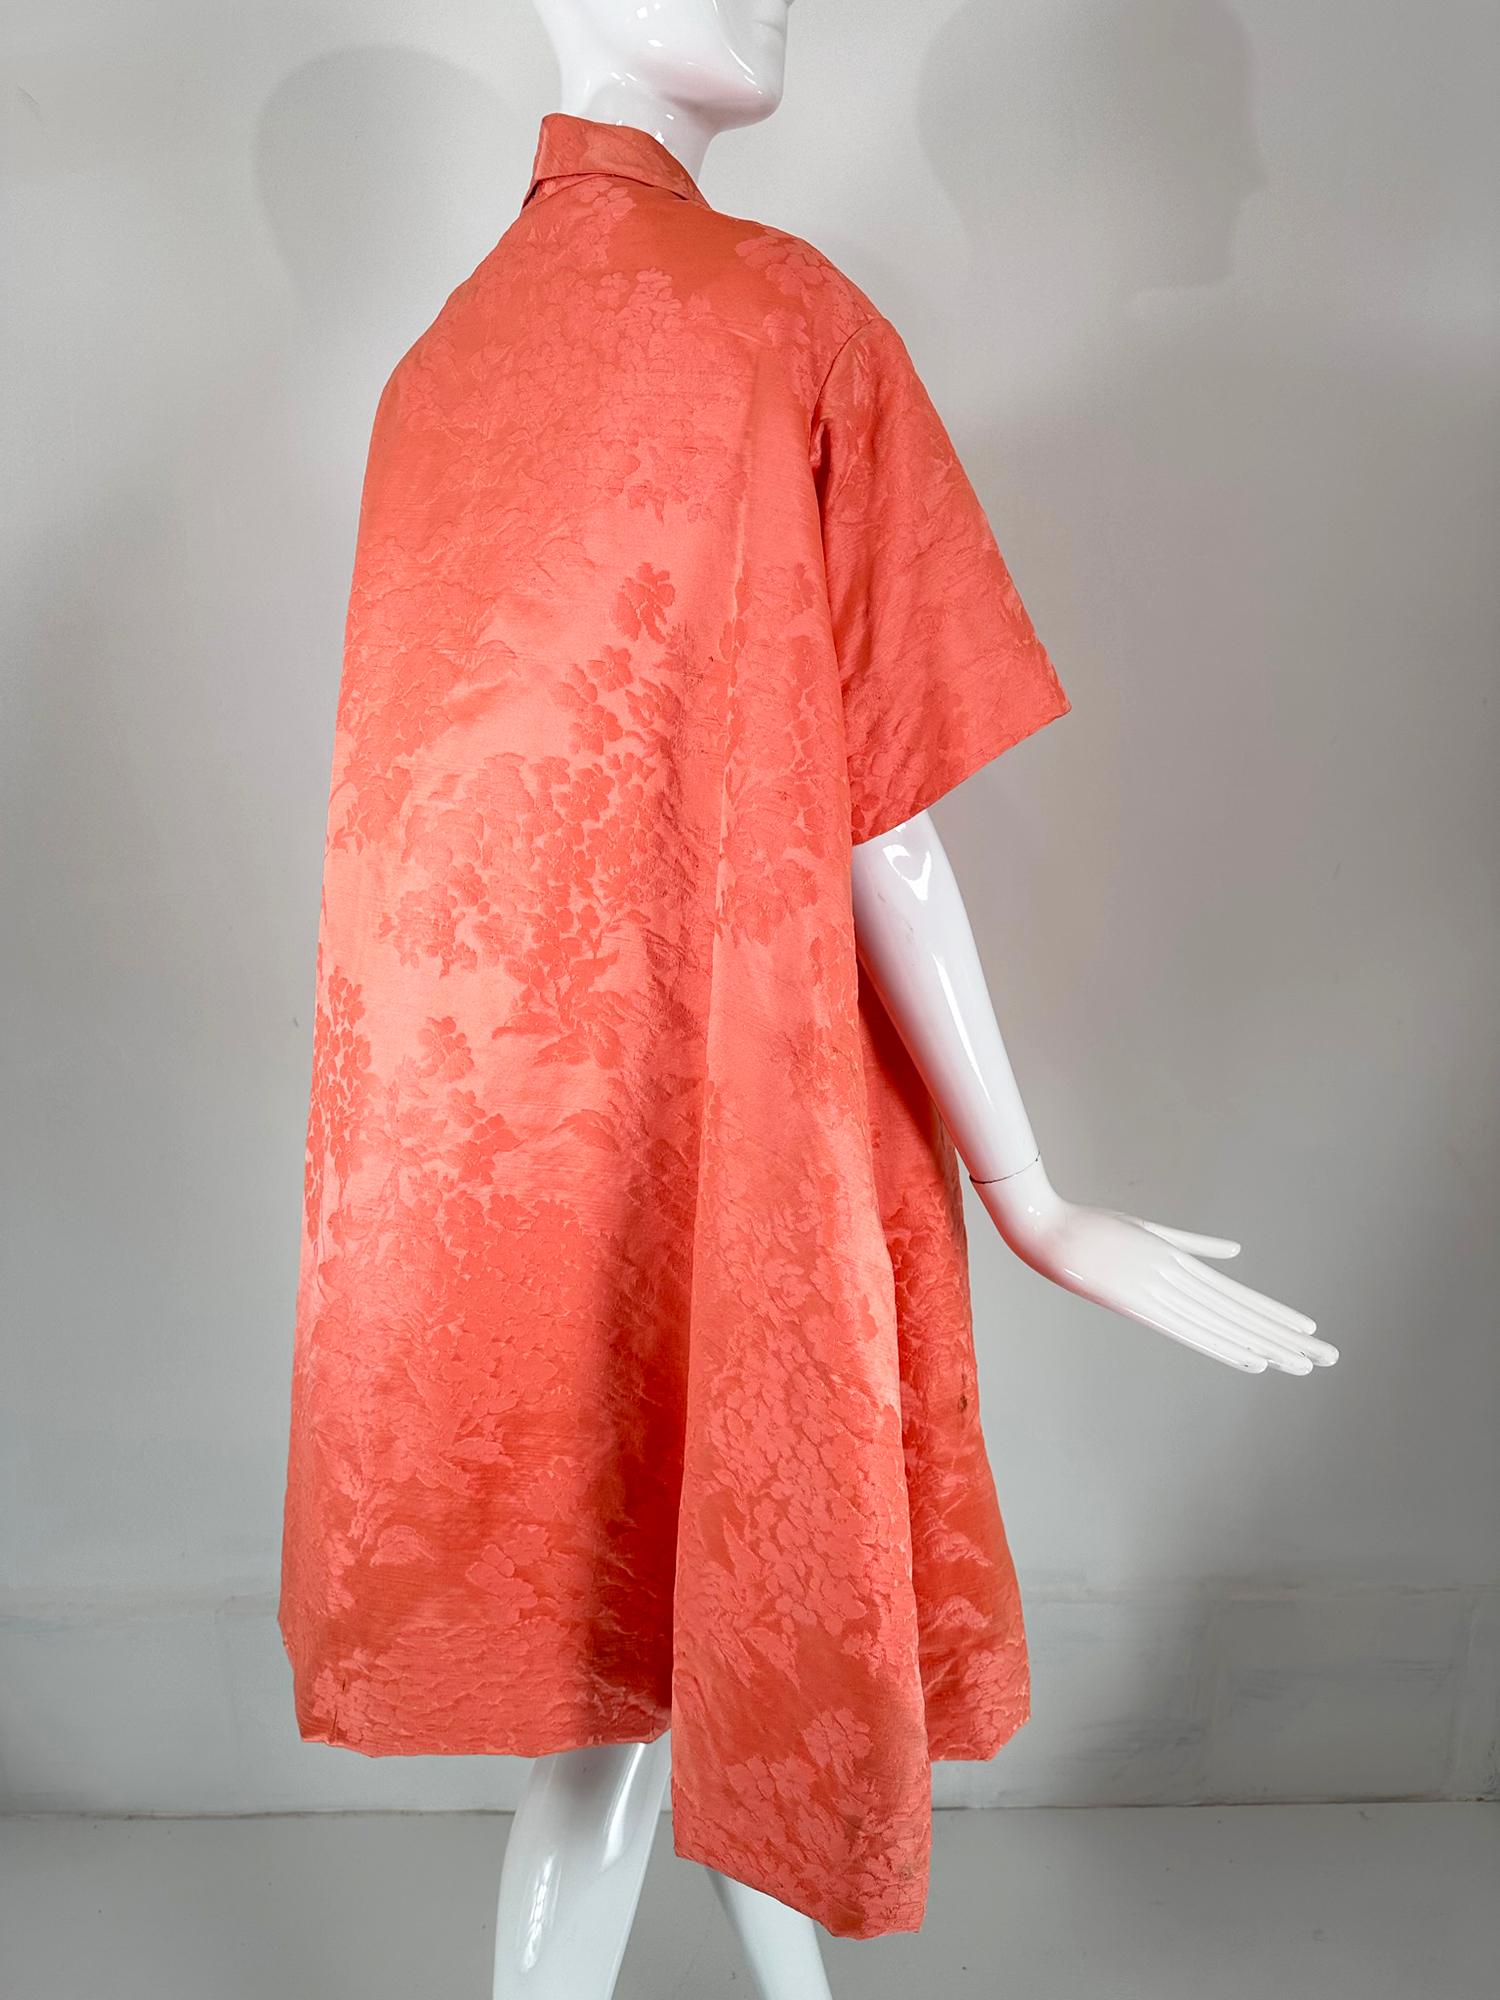 Lanvin Castello Haute Couture Coral Silk Brocade Coat & Dress Ensemble 1950s For Sale 7